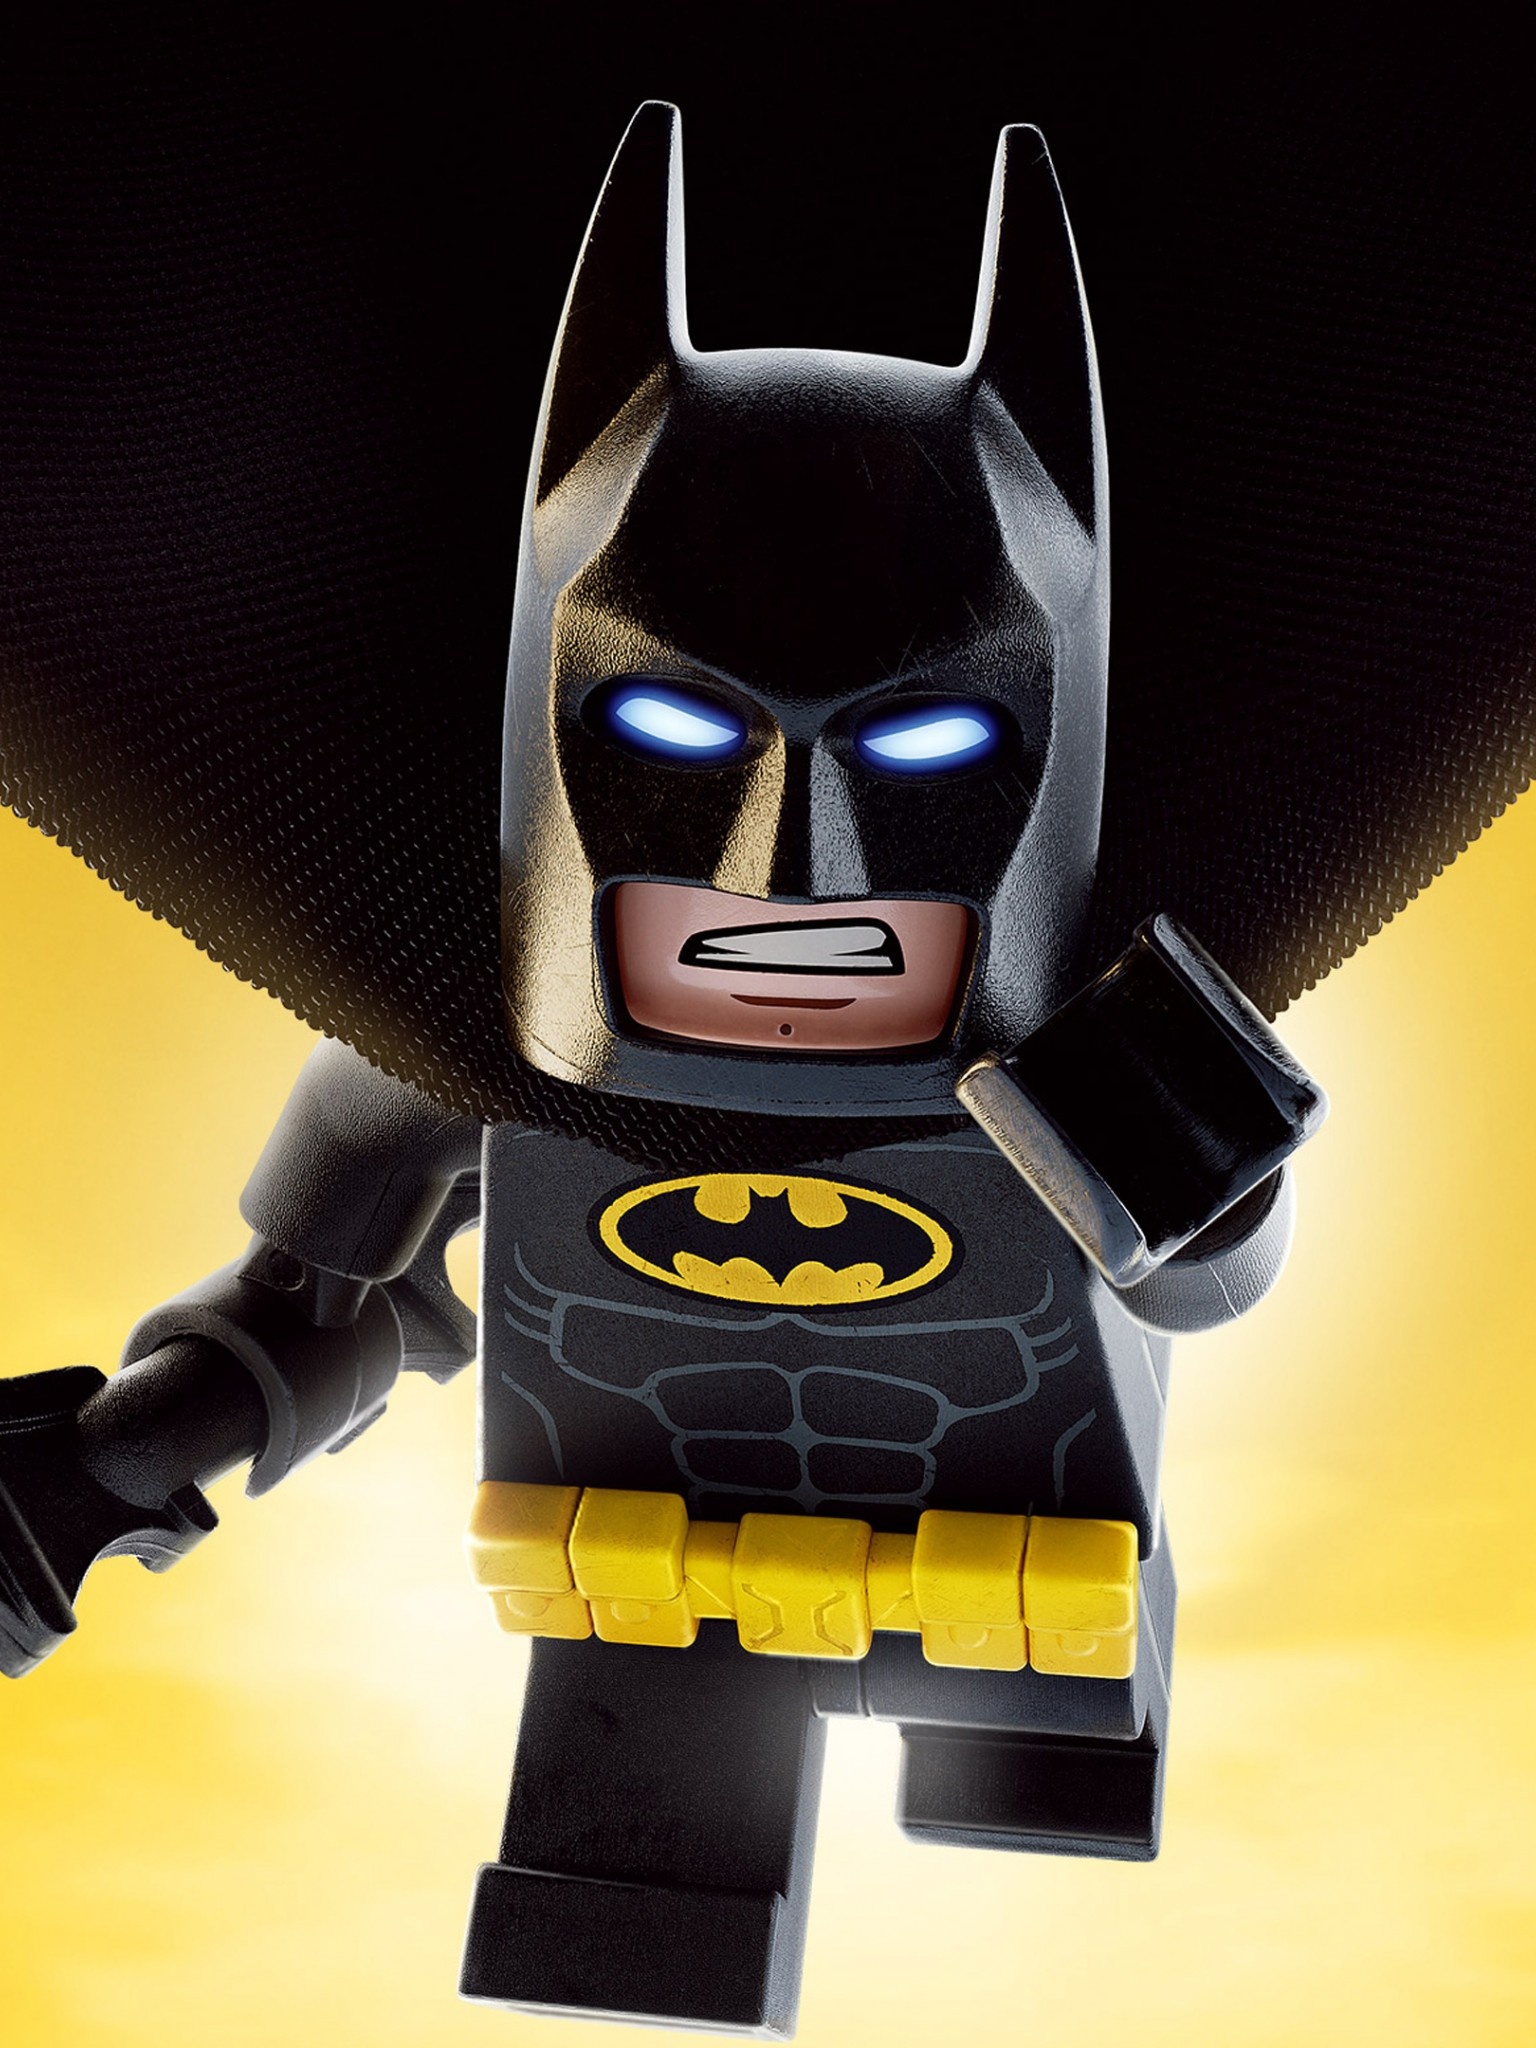 Lego Batman Movie wallpaper, Desktop and mobile download, Retina iPad HD, Stunning art, 1540x2050 HD Handy